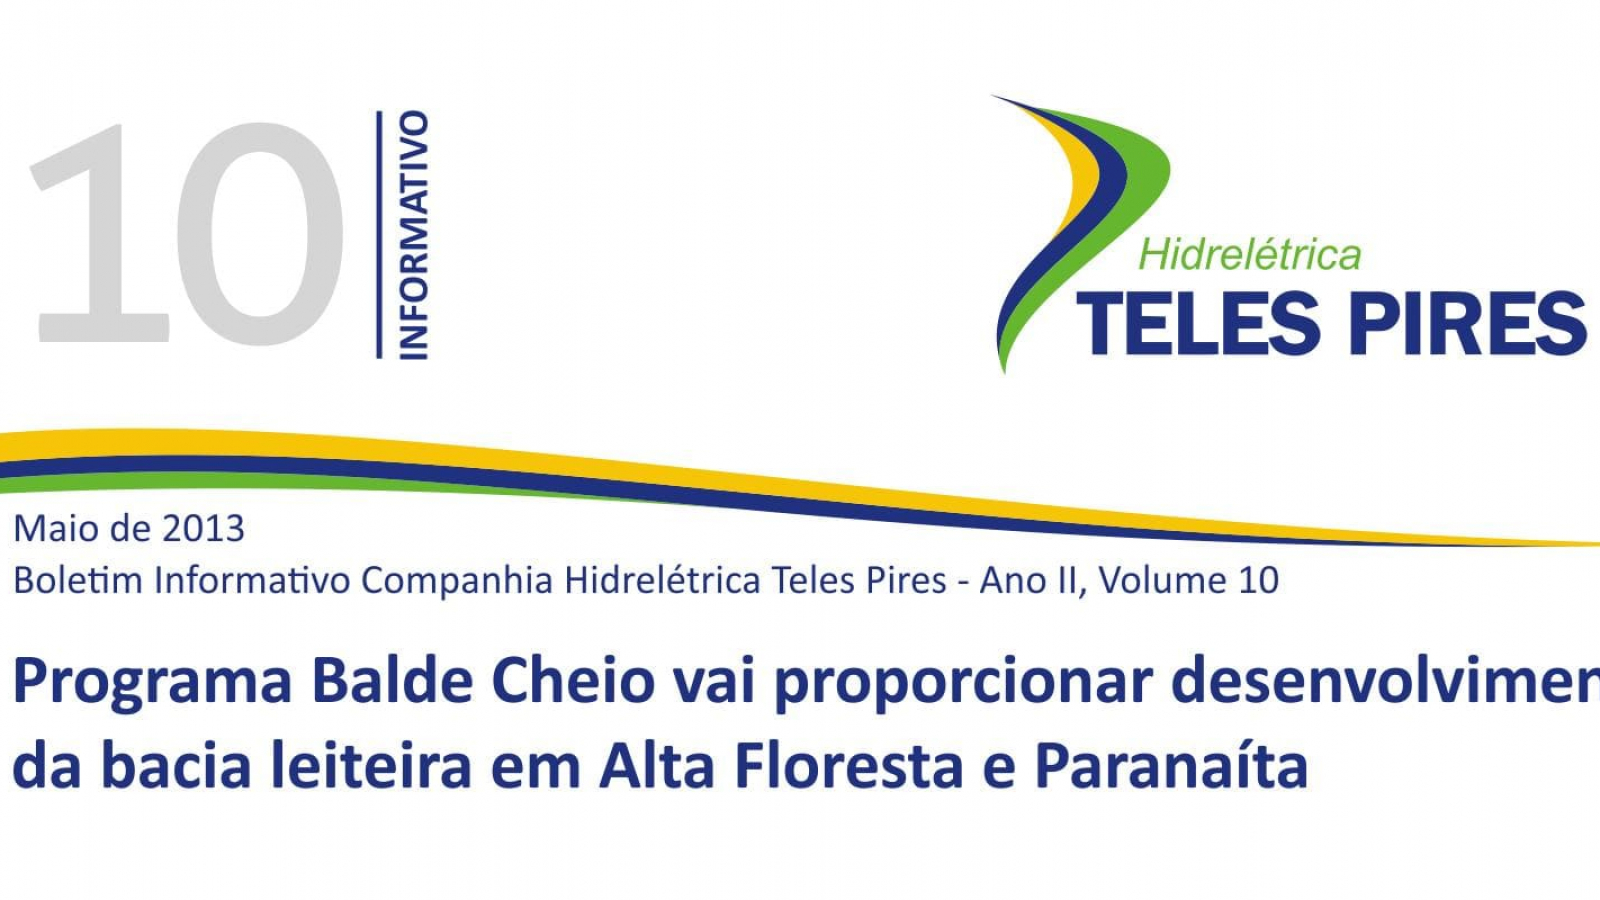 Boletim Informativo Companhia Hidrelétrica Teles Pires - Volume 10